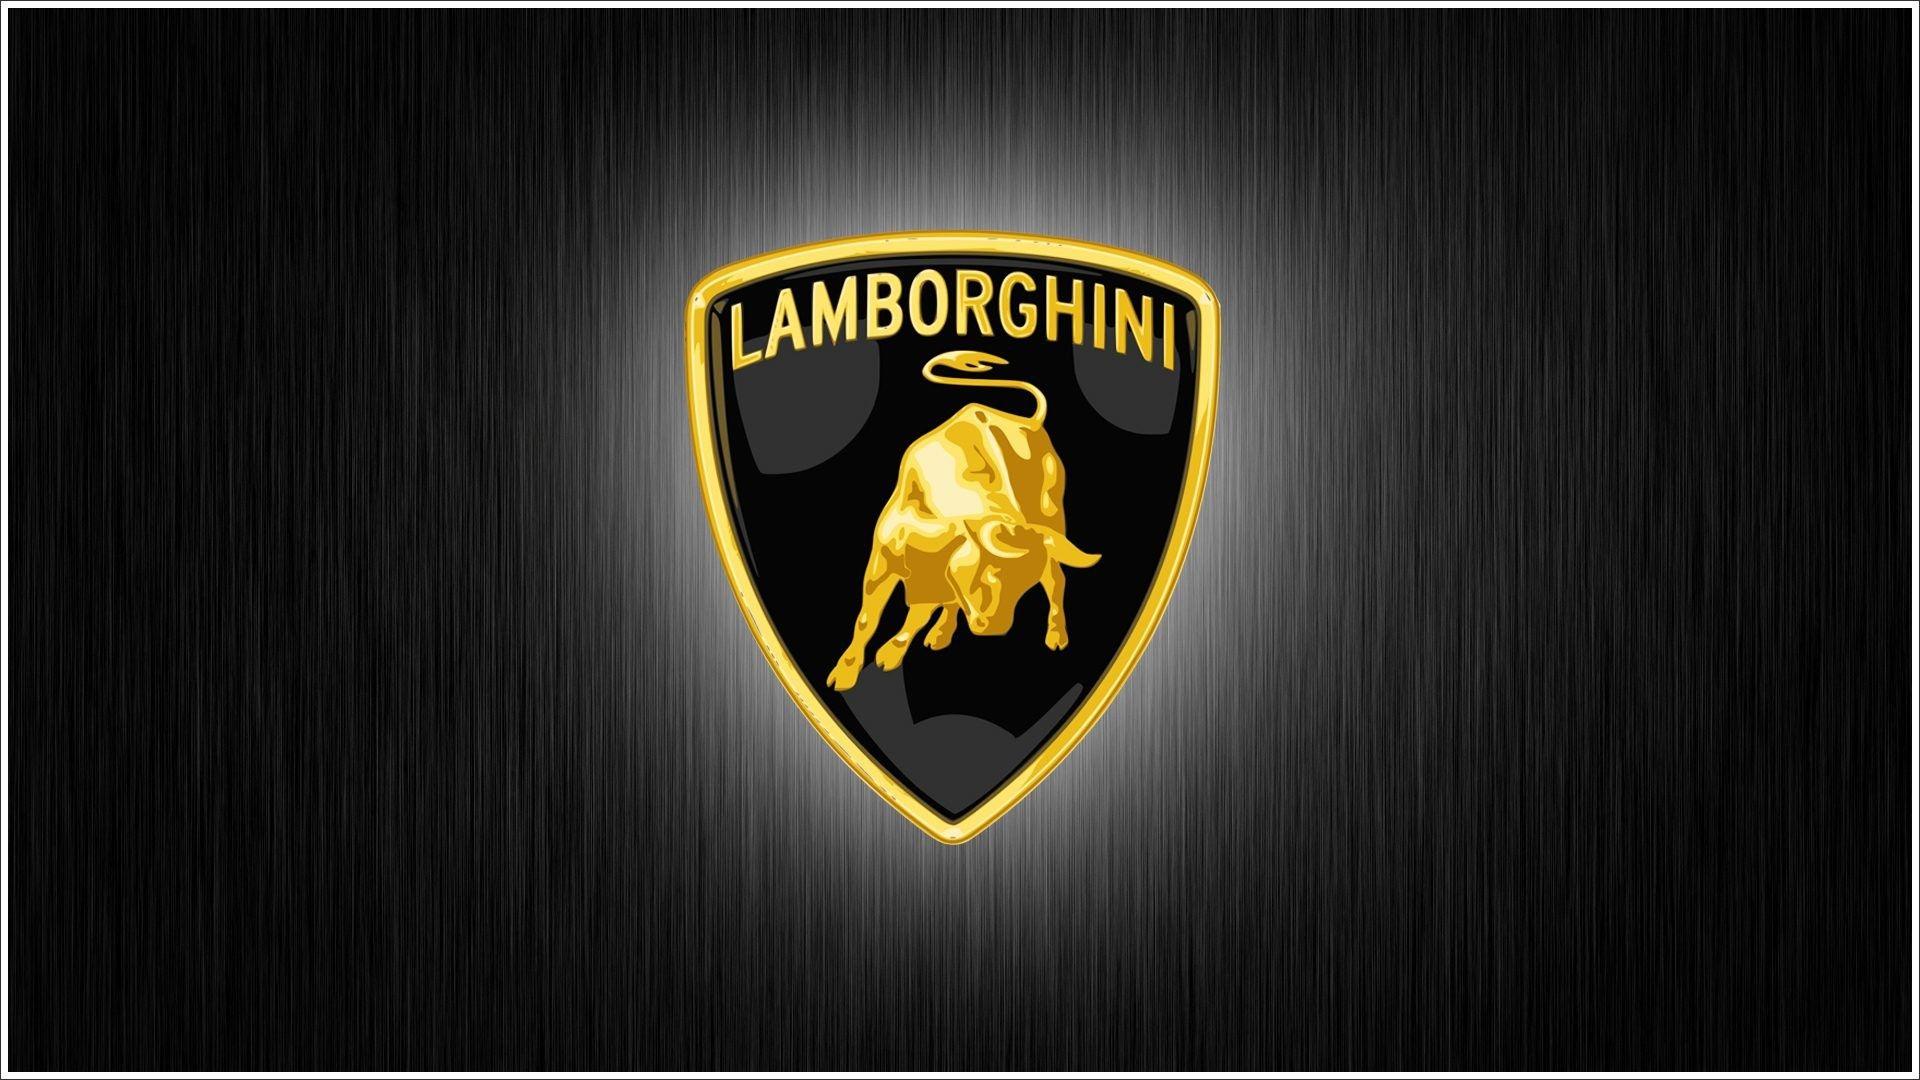 Lamborghini Logo With Backgrounds - Wallpaper Cave